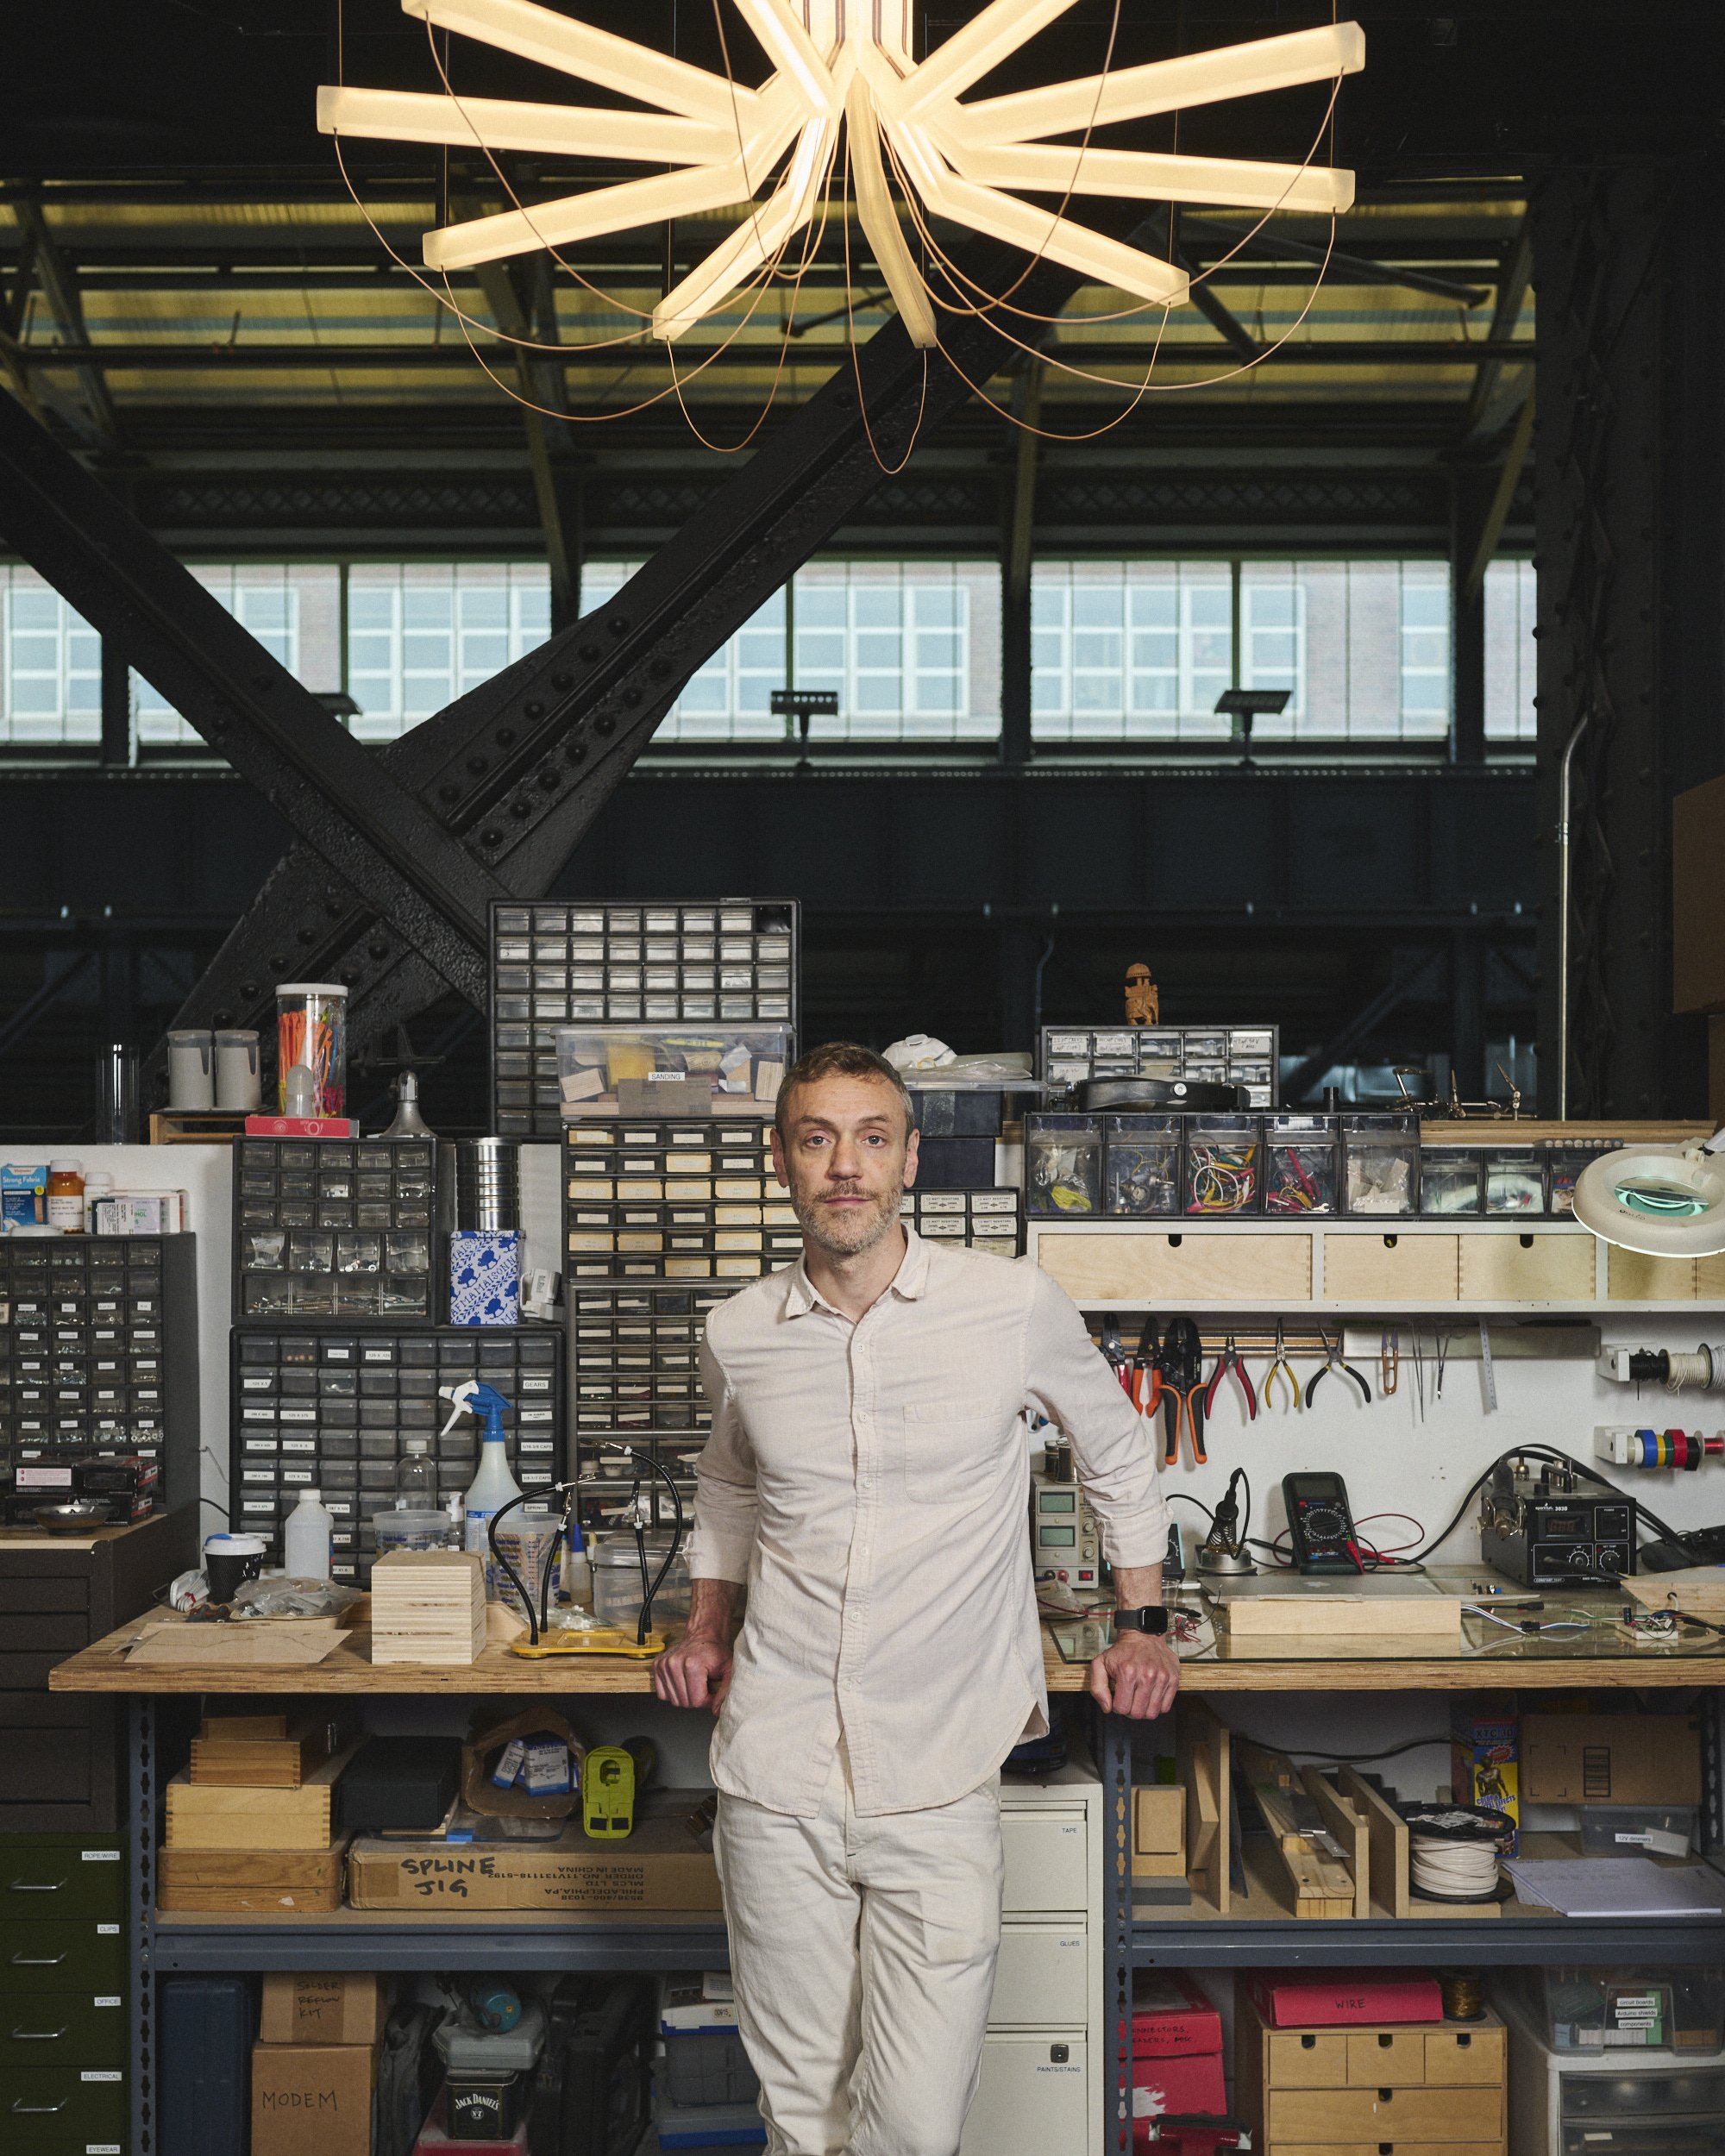 Brooklyn based artist and designer Eric Forman in his studio 